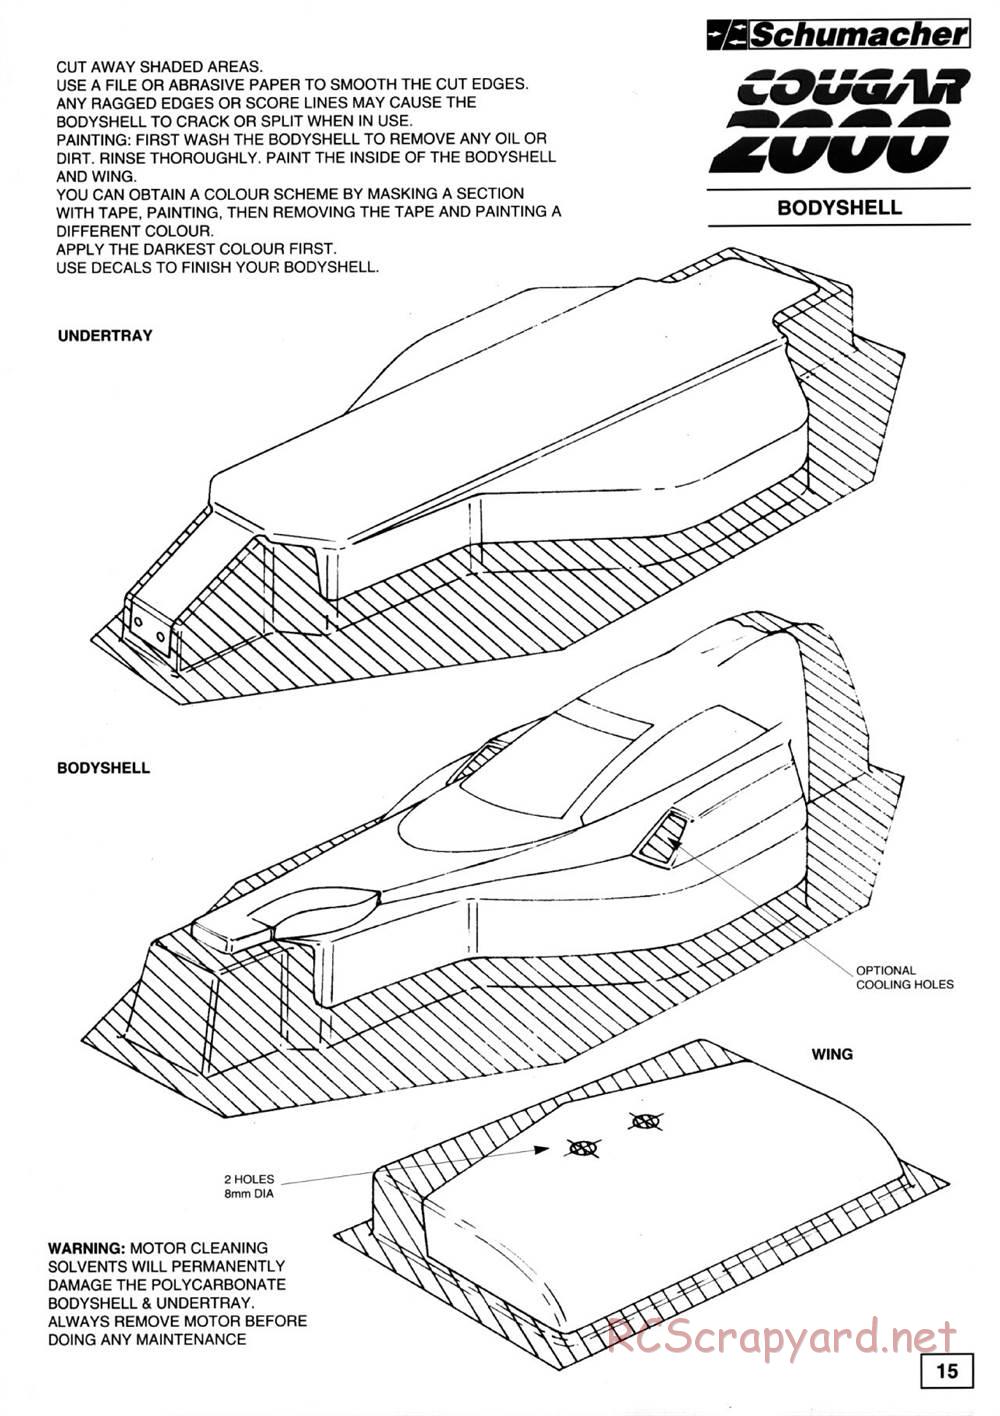 Schumacher - Cougar 2000 - Manual - Page 21